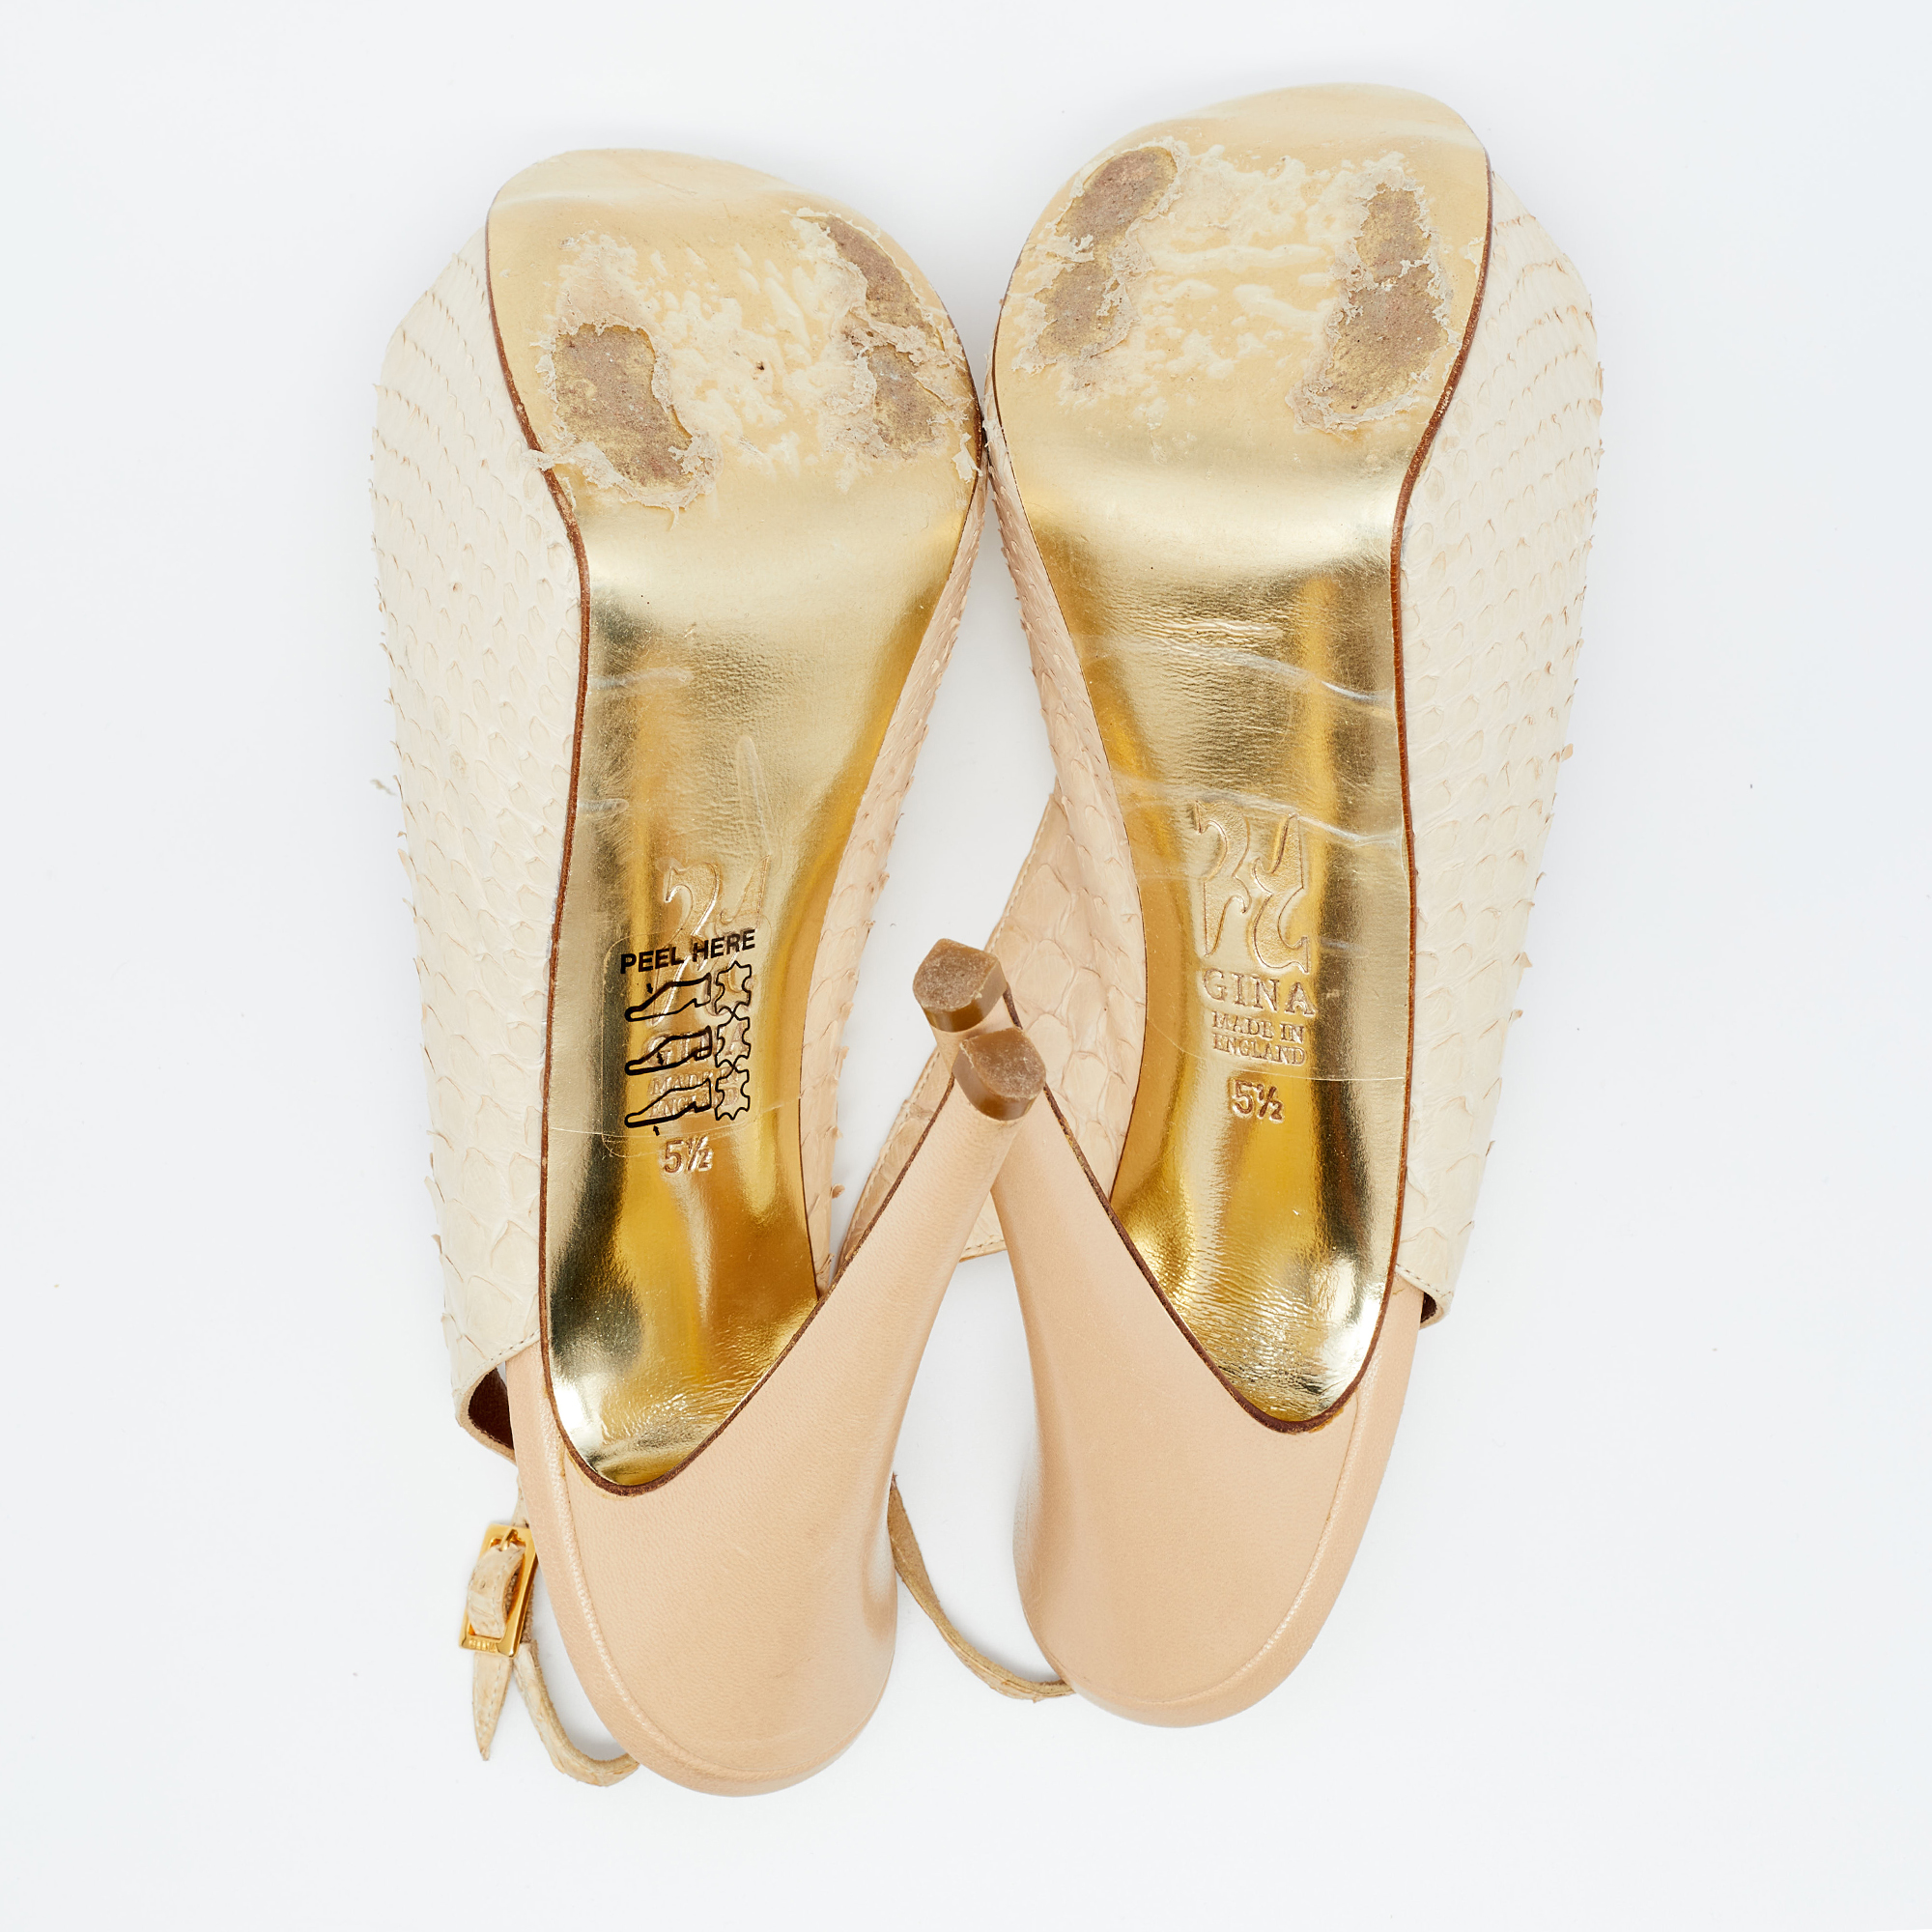 Gina Beige Python Leather Peep Toe Platform Slingback Sandals Size 38.5